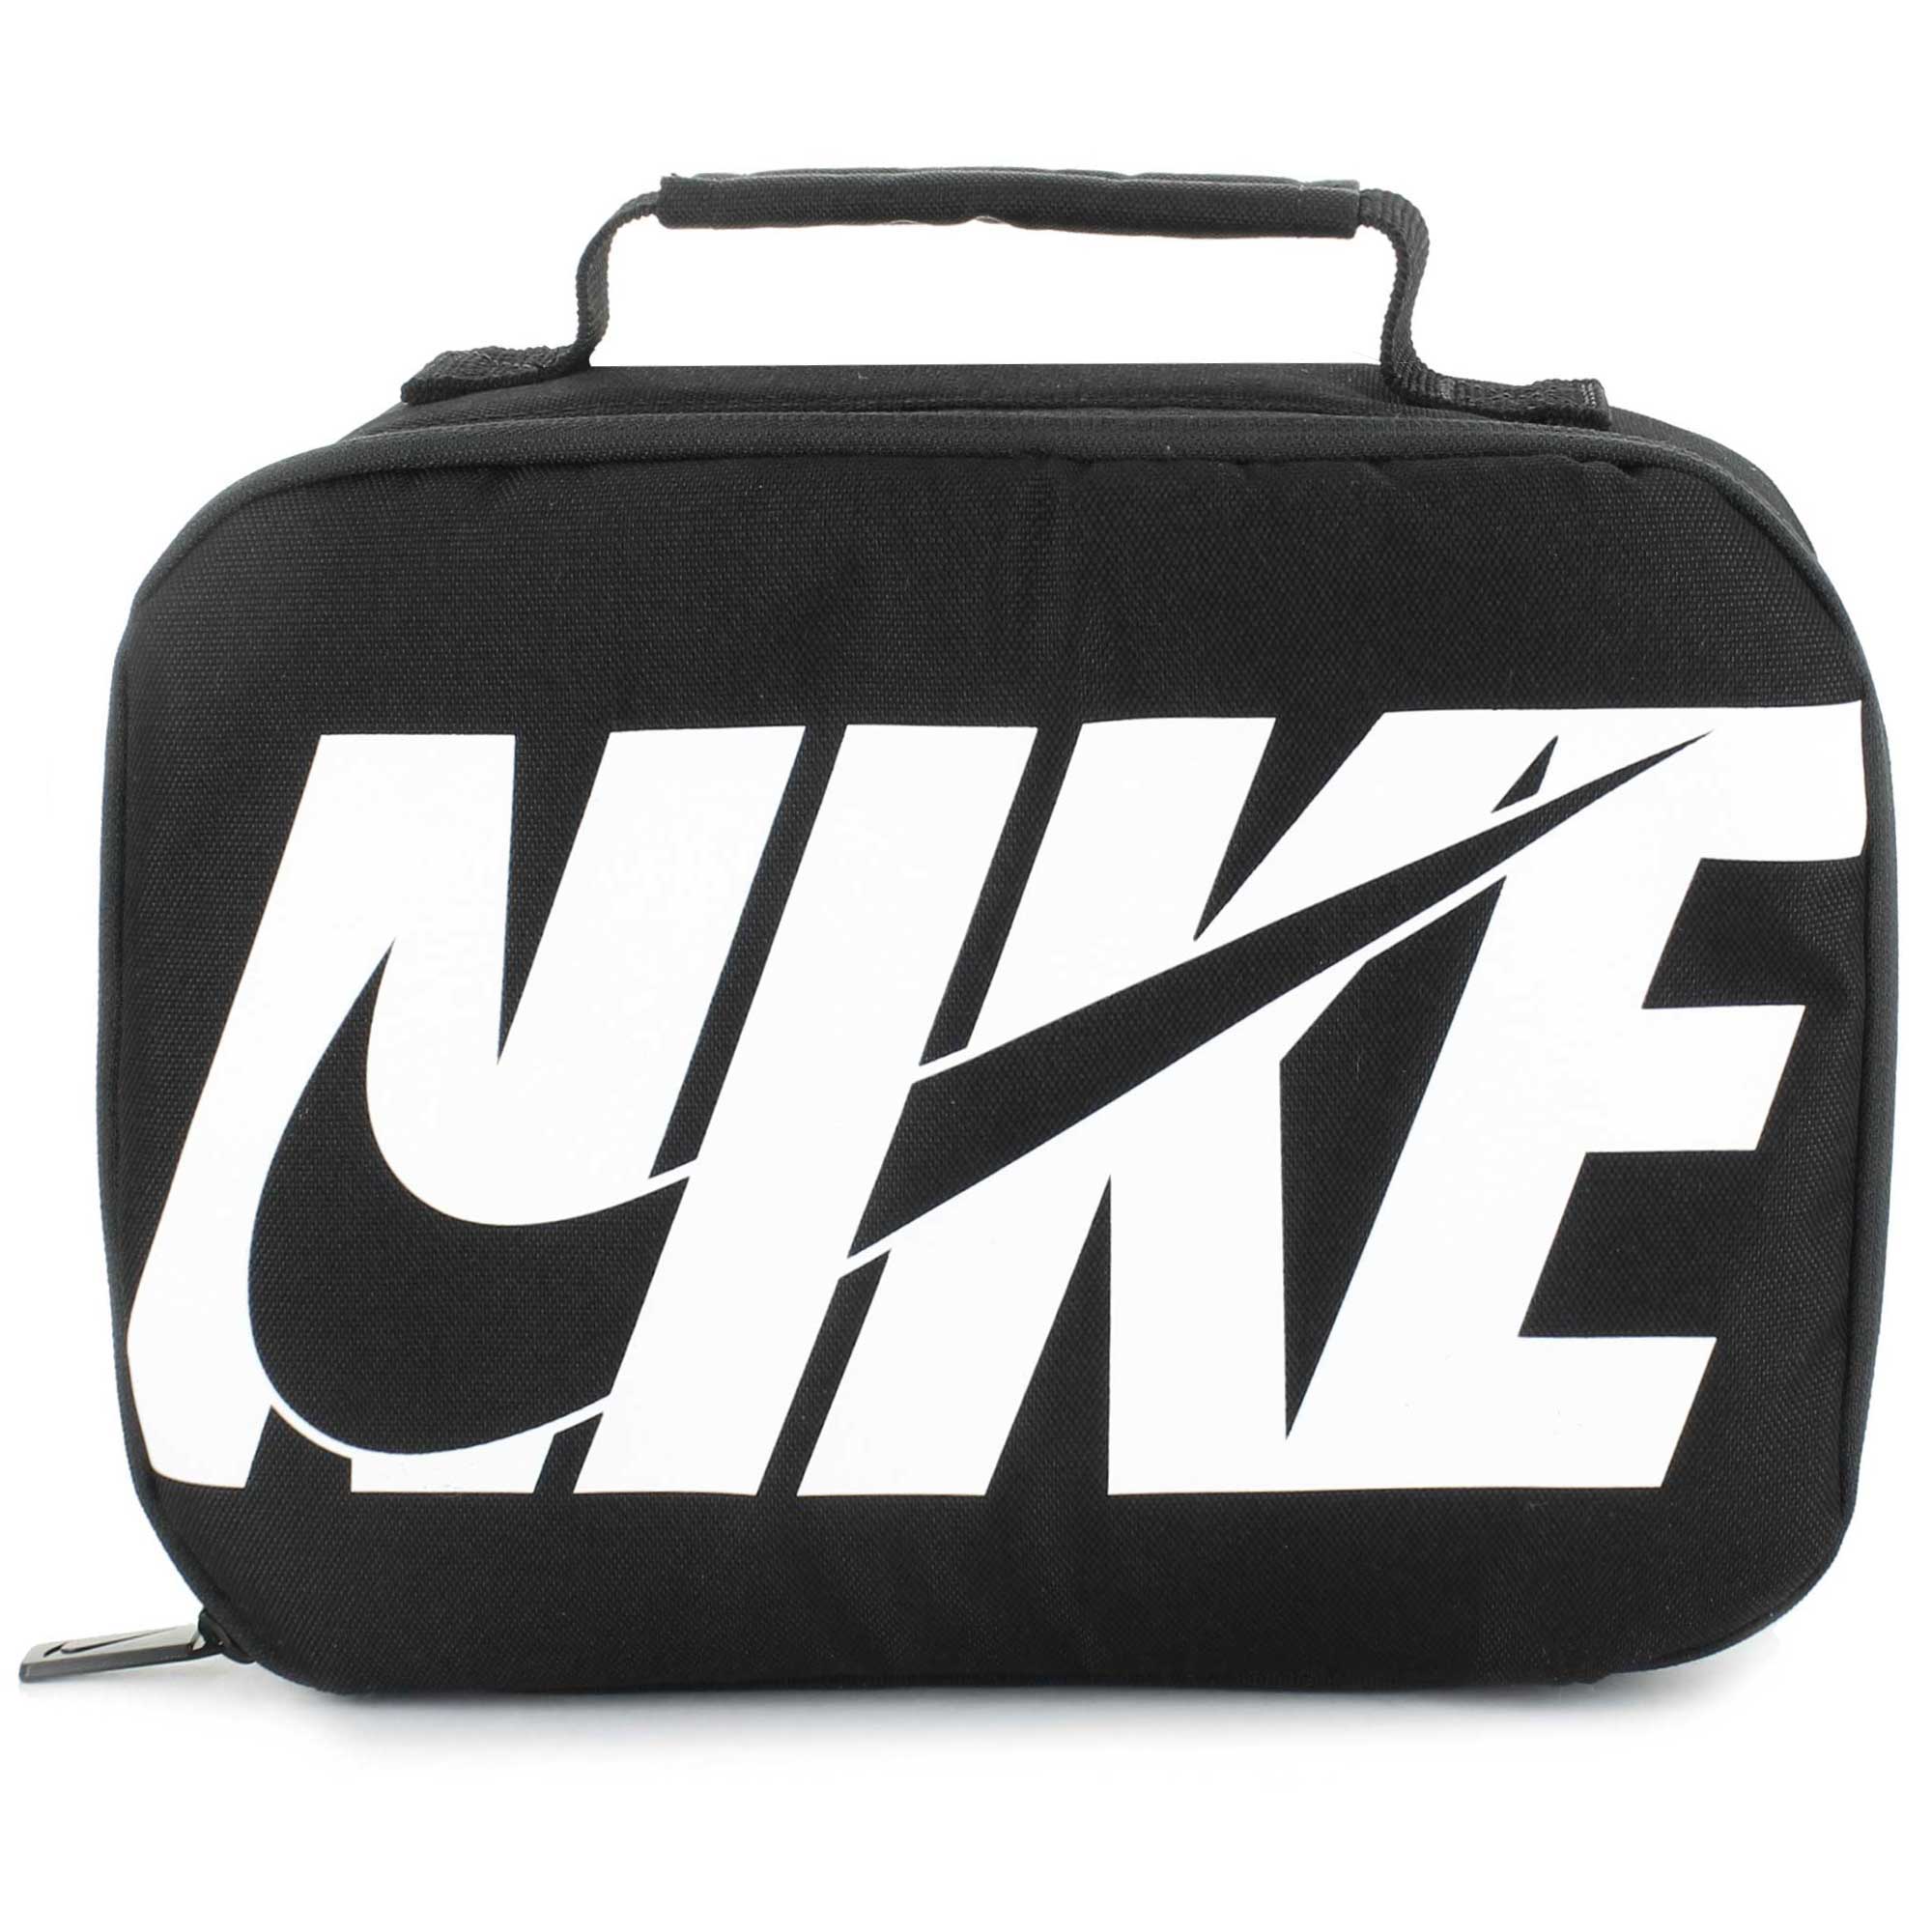 Nike Lunch Bag.